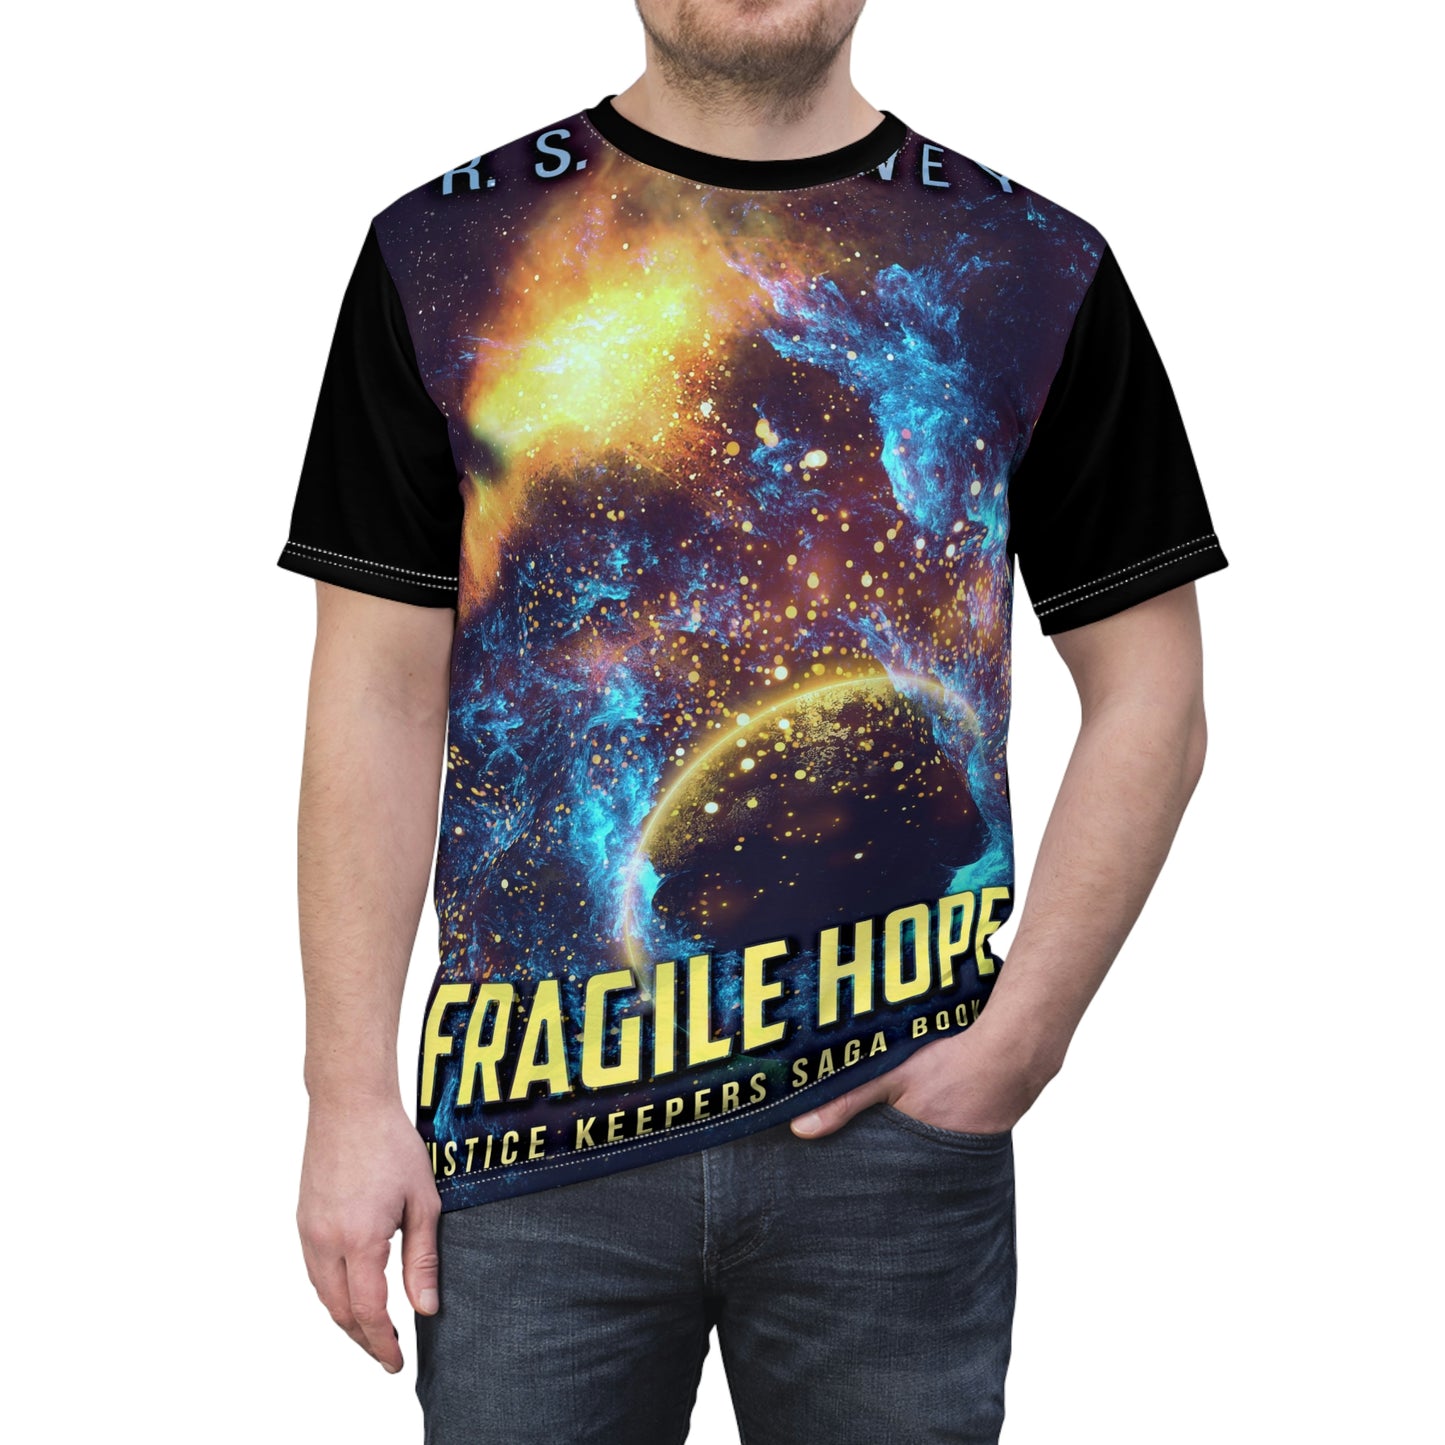 Fragile Hope - Unisex All-Over Print Cut & Sew T-Shirt